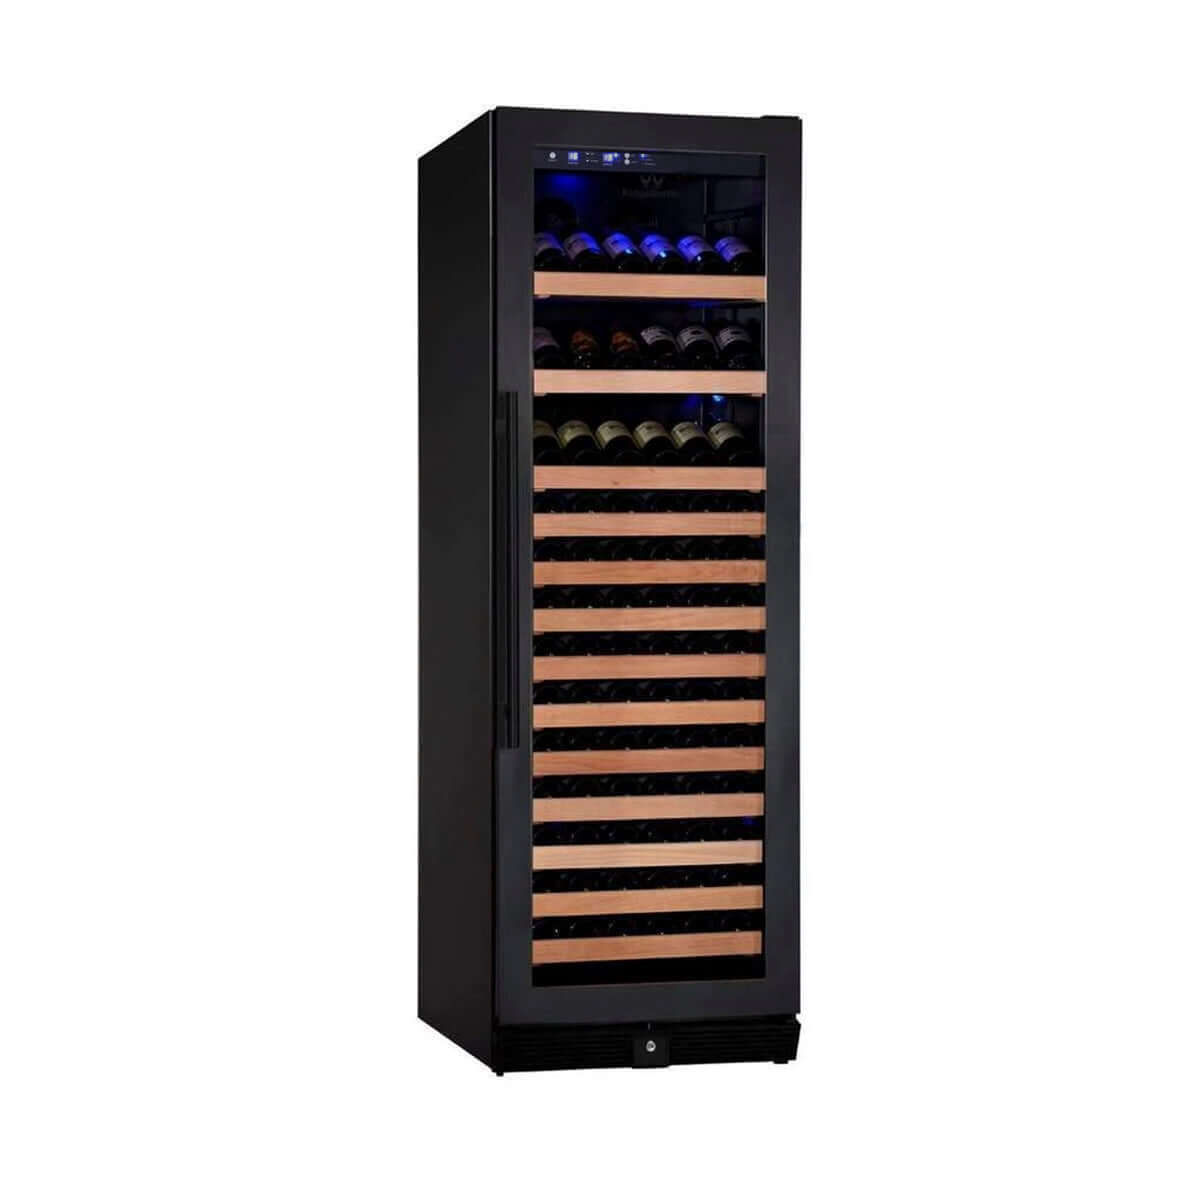 Upright wine fridge with wooden shelves